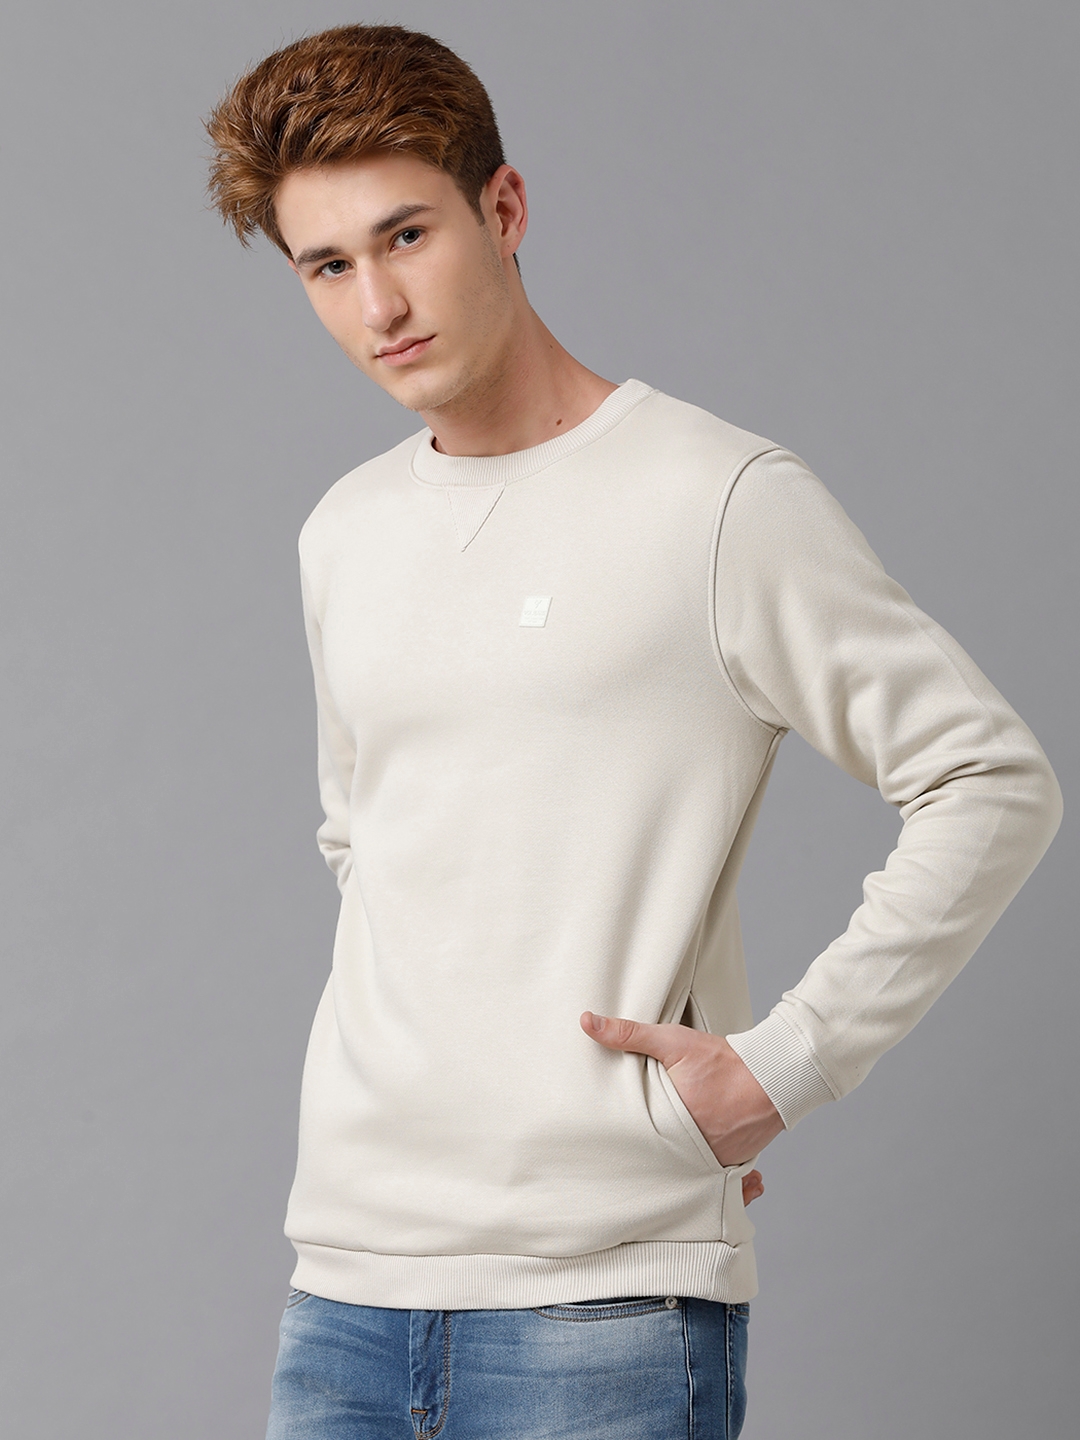 Men's Off White Cotton Blend Solid Sweatshirts